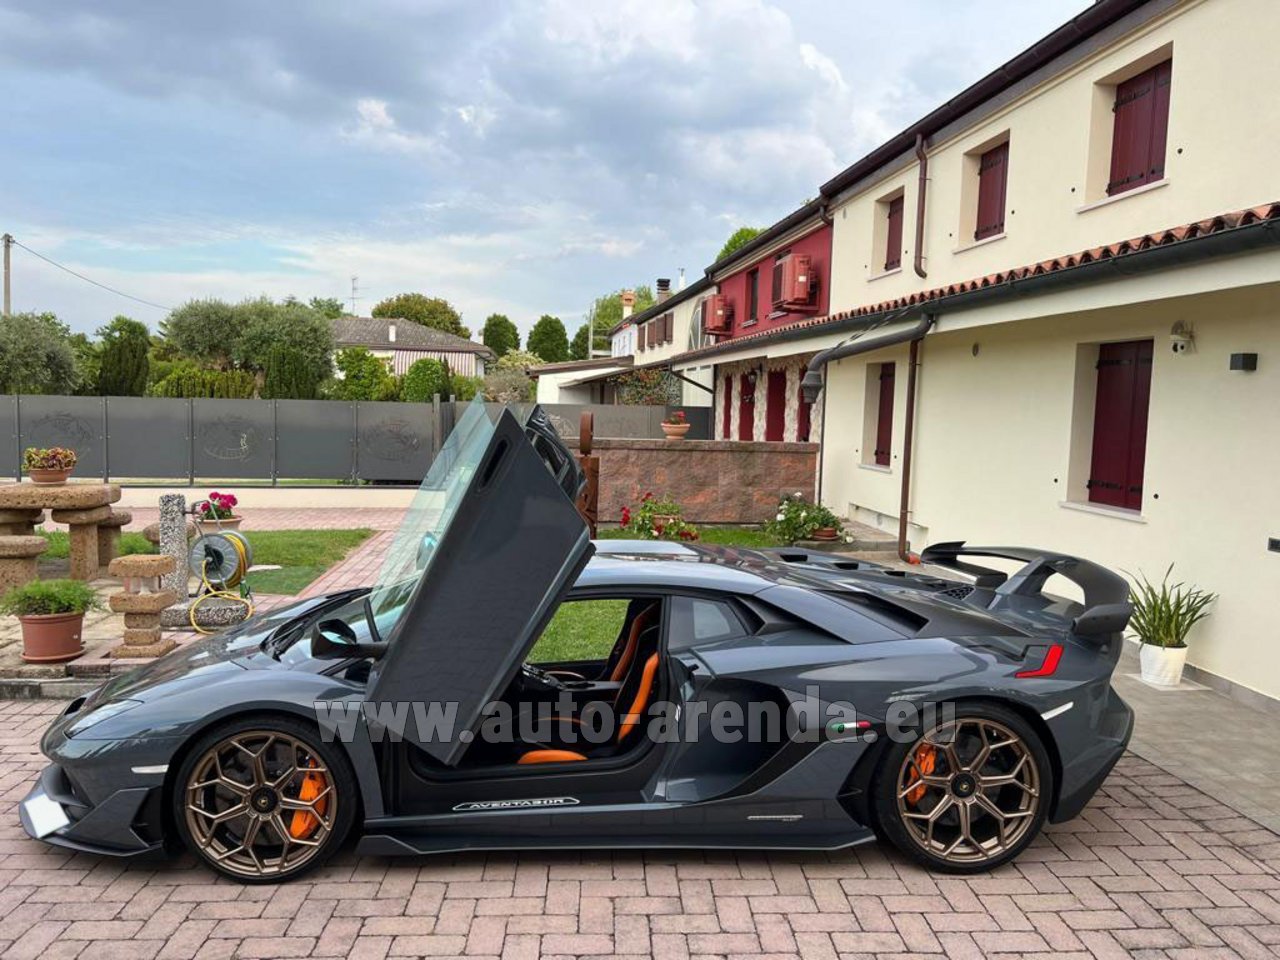 Rent Lamborghini Aventador SVJ in Genève Aéroport (GVA) | Auto-Arenda